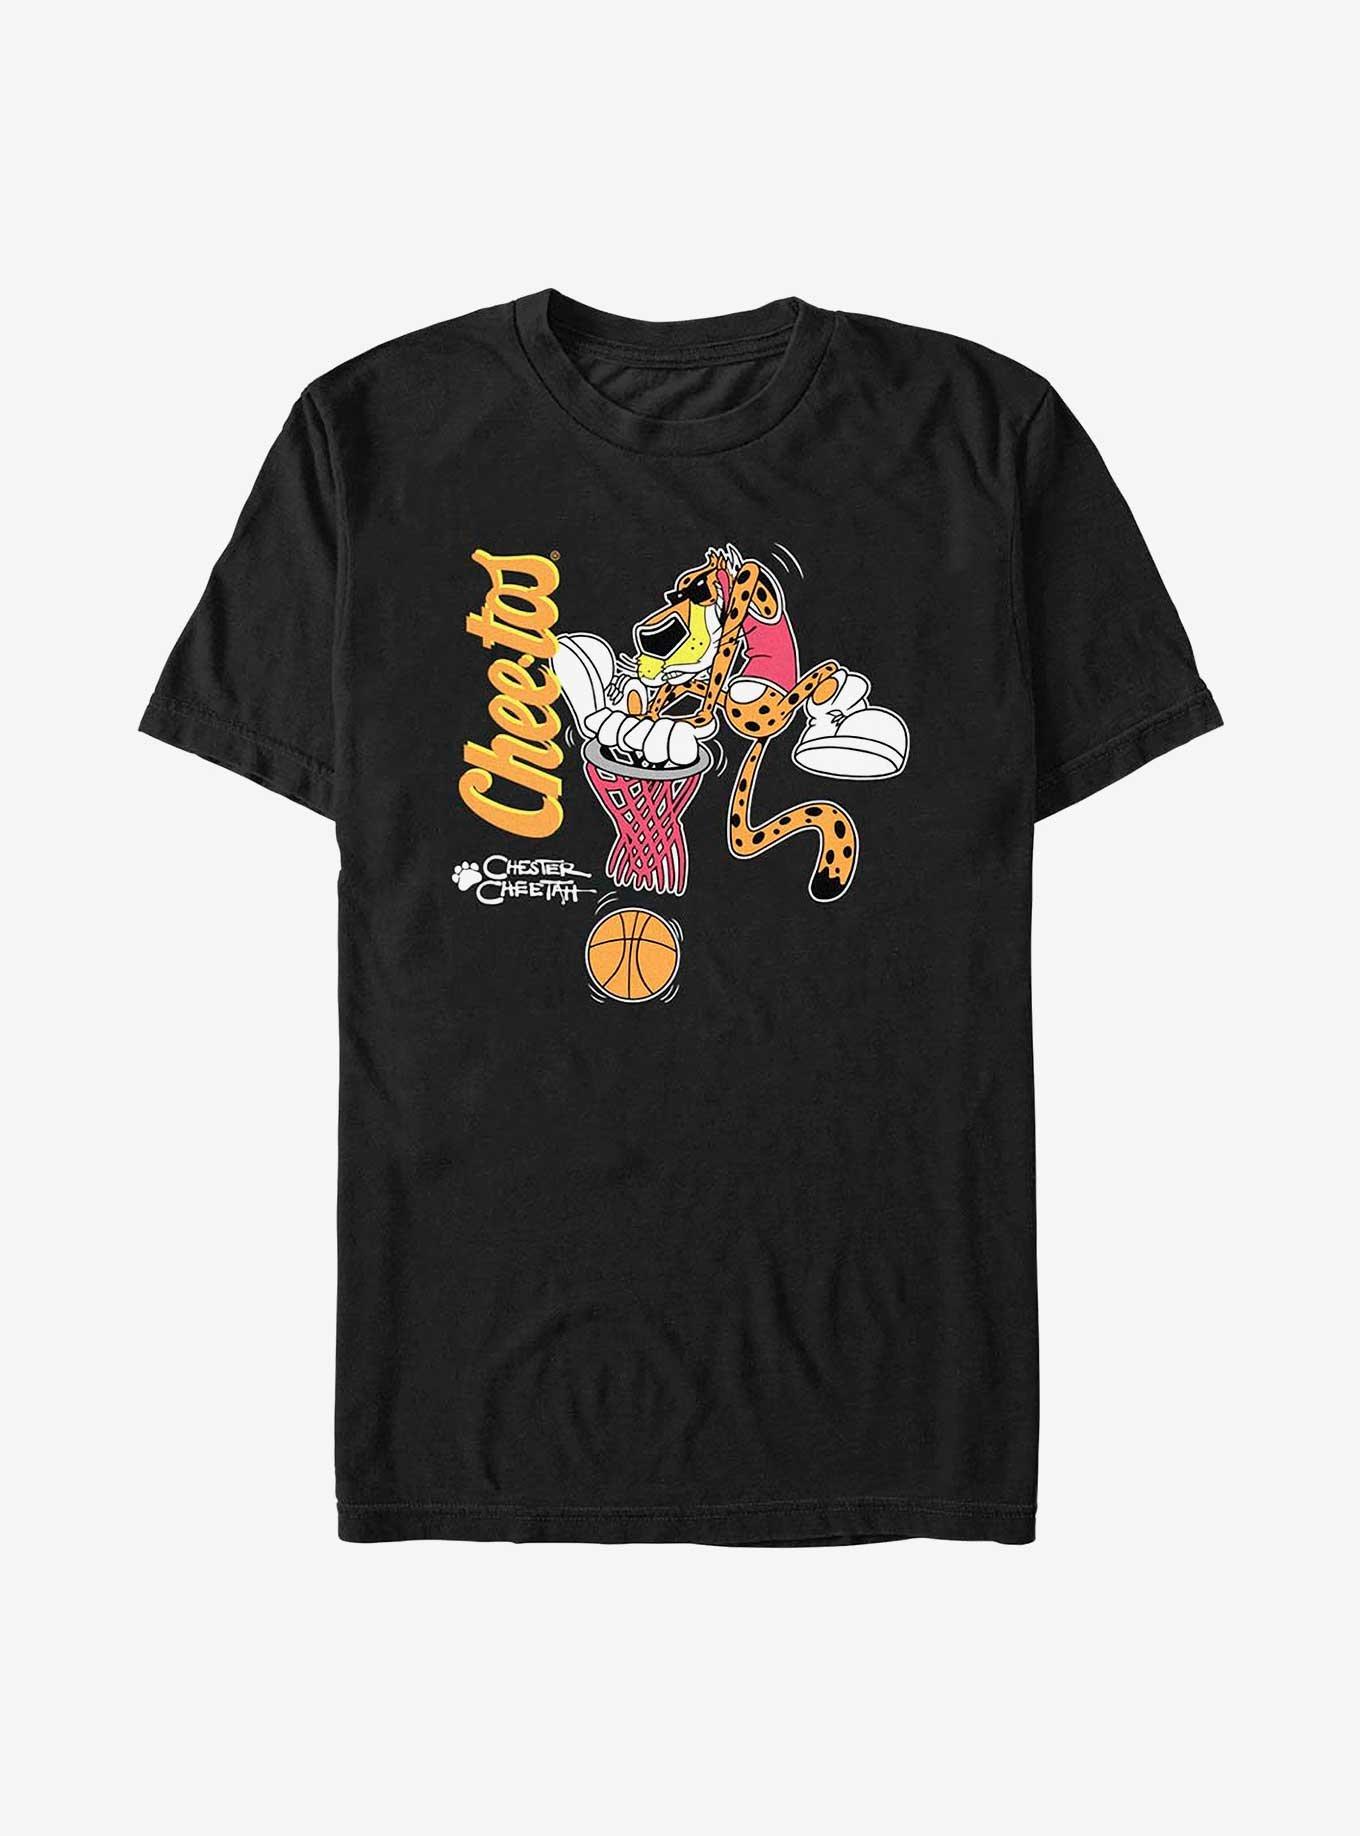 Cheetos 90S Chester Hoopin T-Shirt, BLACK, hi-res